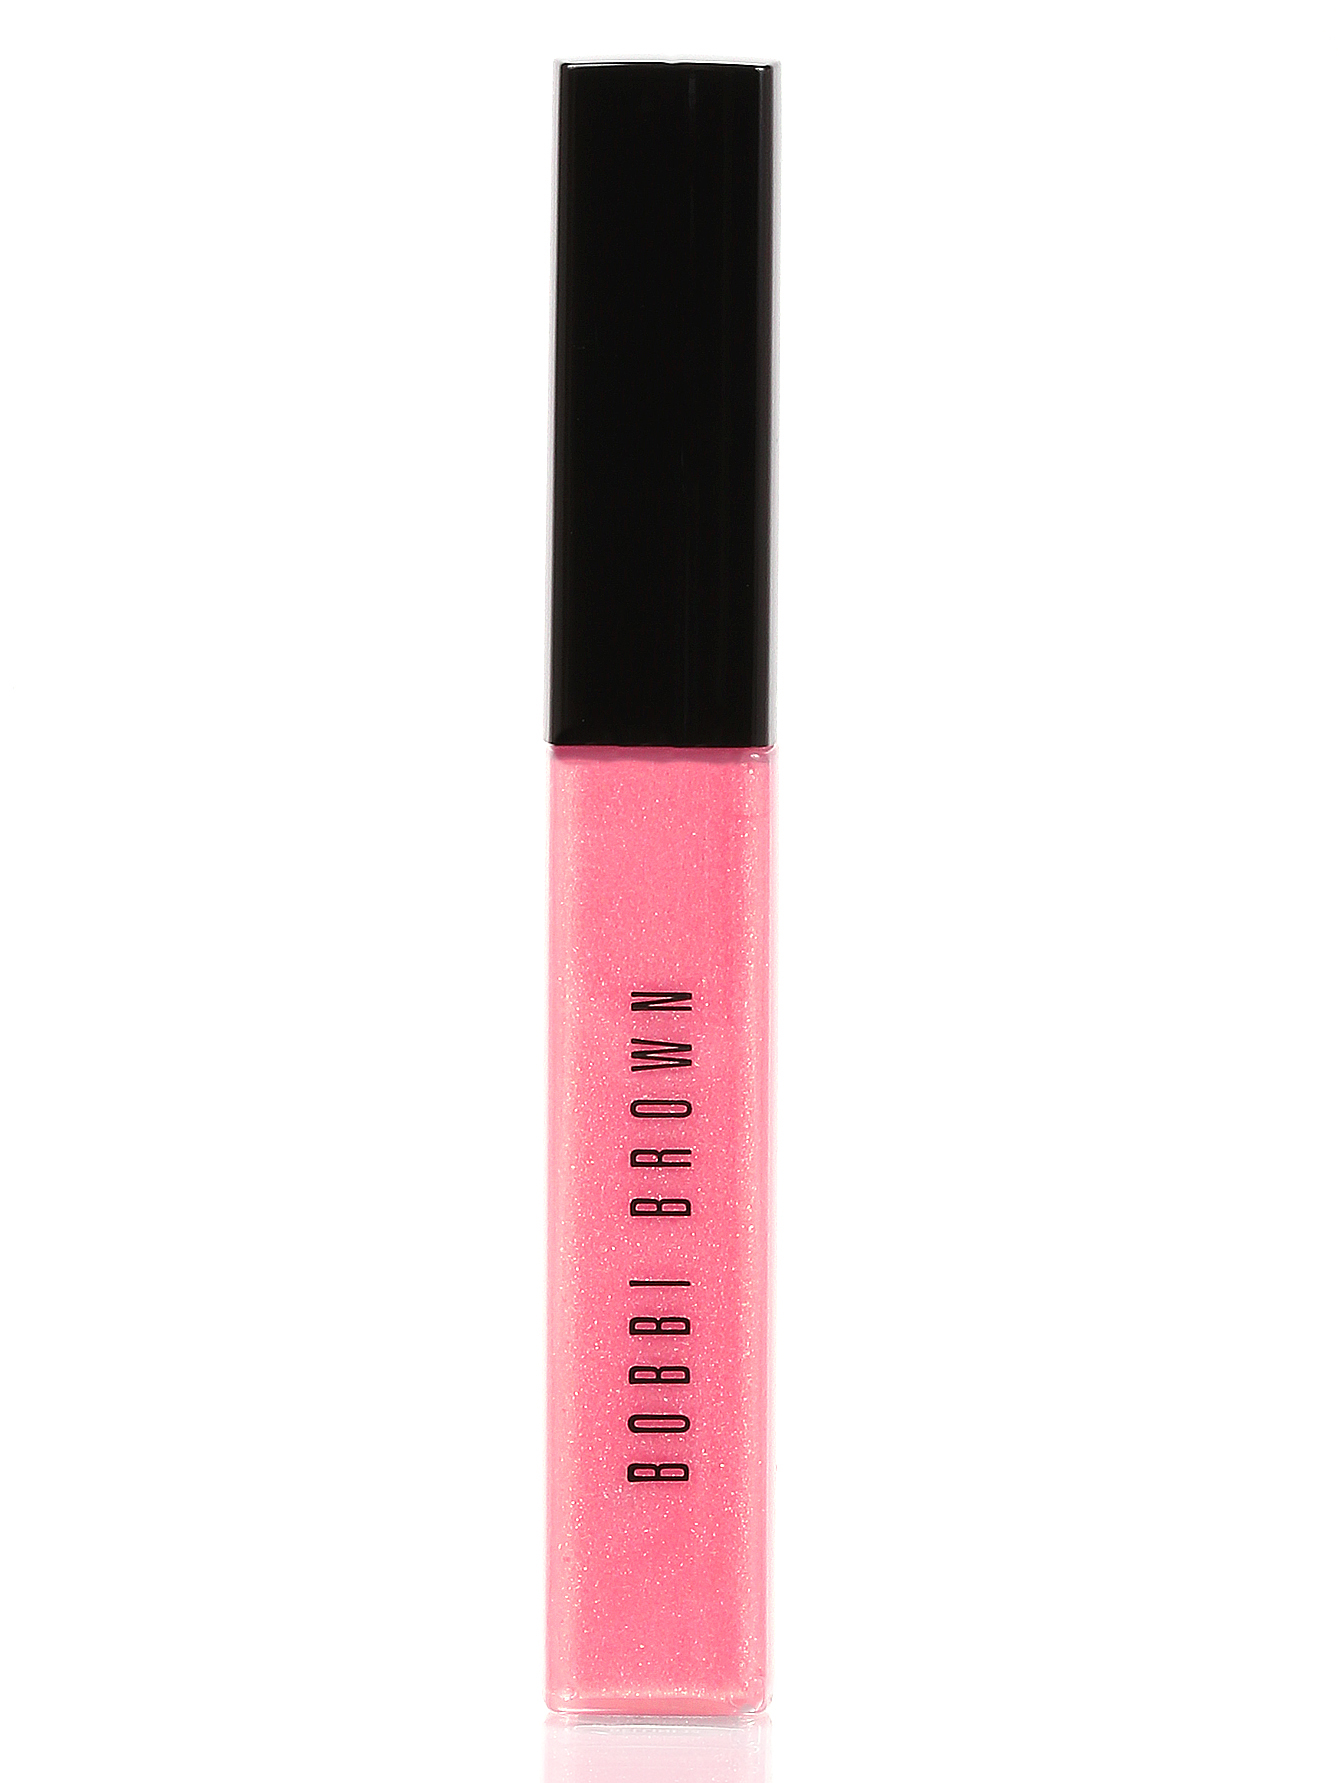 Блеск для губ - Pink tulle, Lip gloss - Общий вид